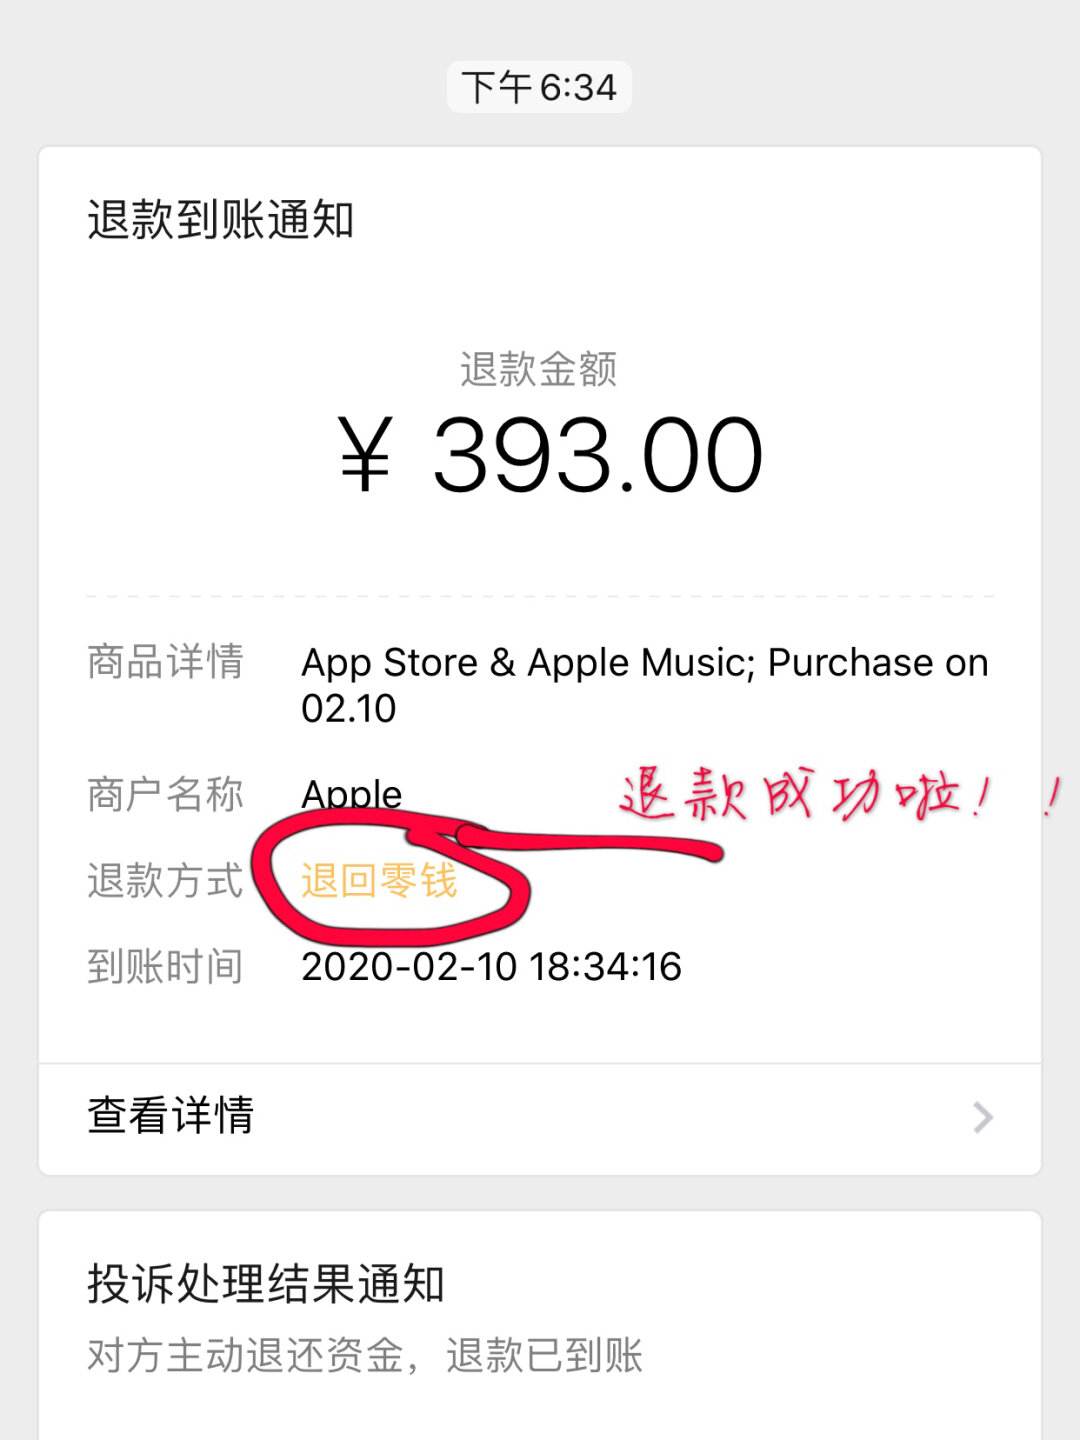 apple要求退款(iphone退款要求)